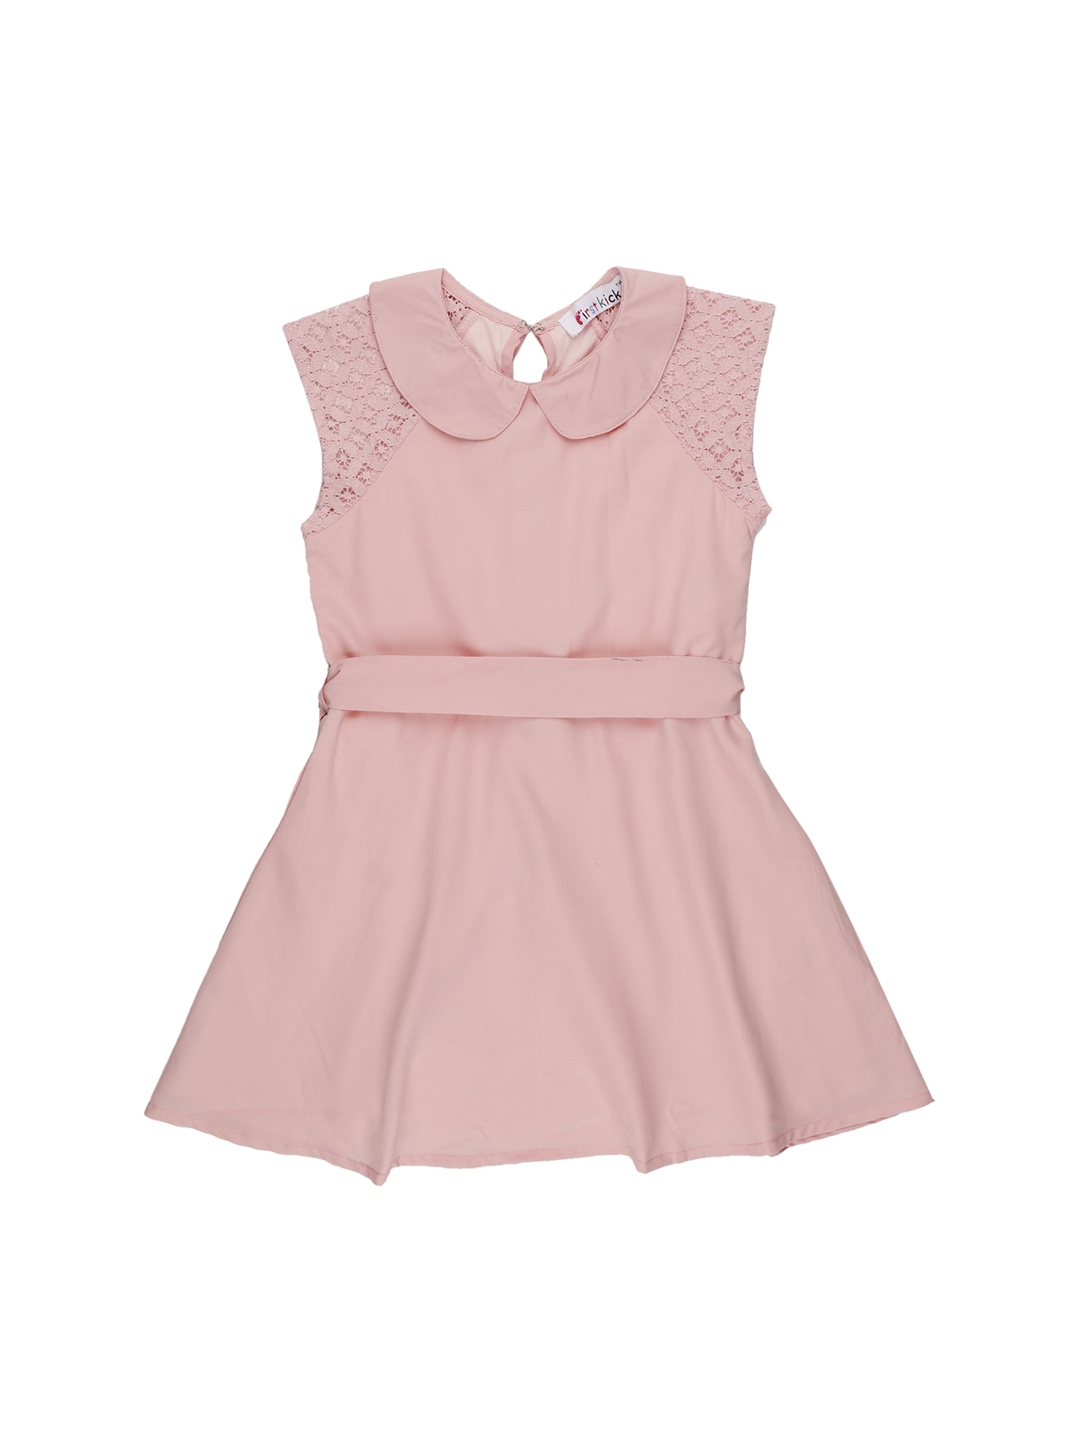 Buy First Kick Pink Peter Pan Collar Crepe Dress - Dresses for Girls ...